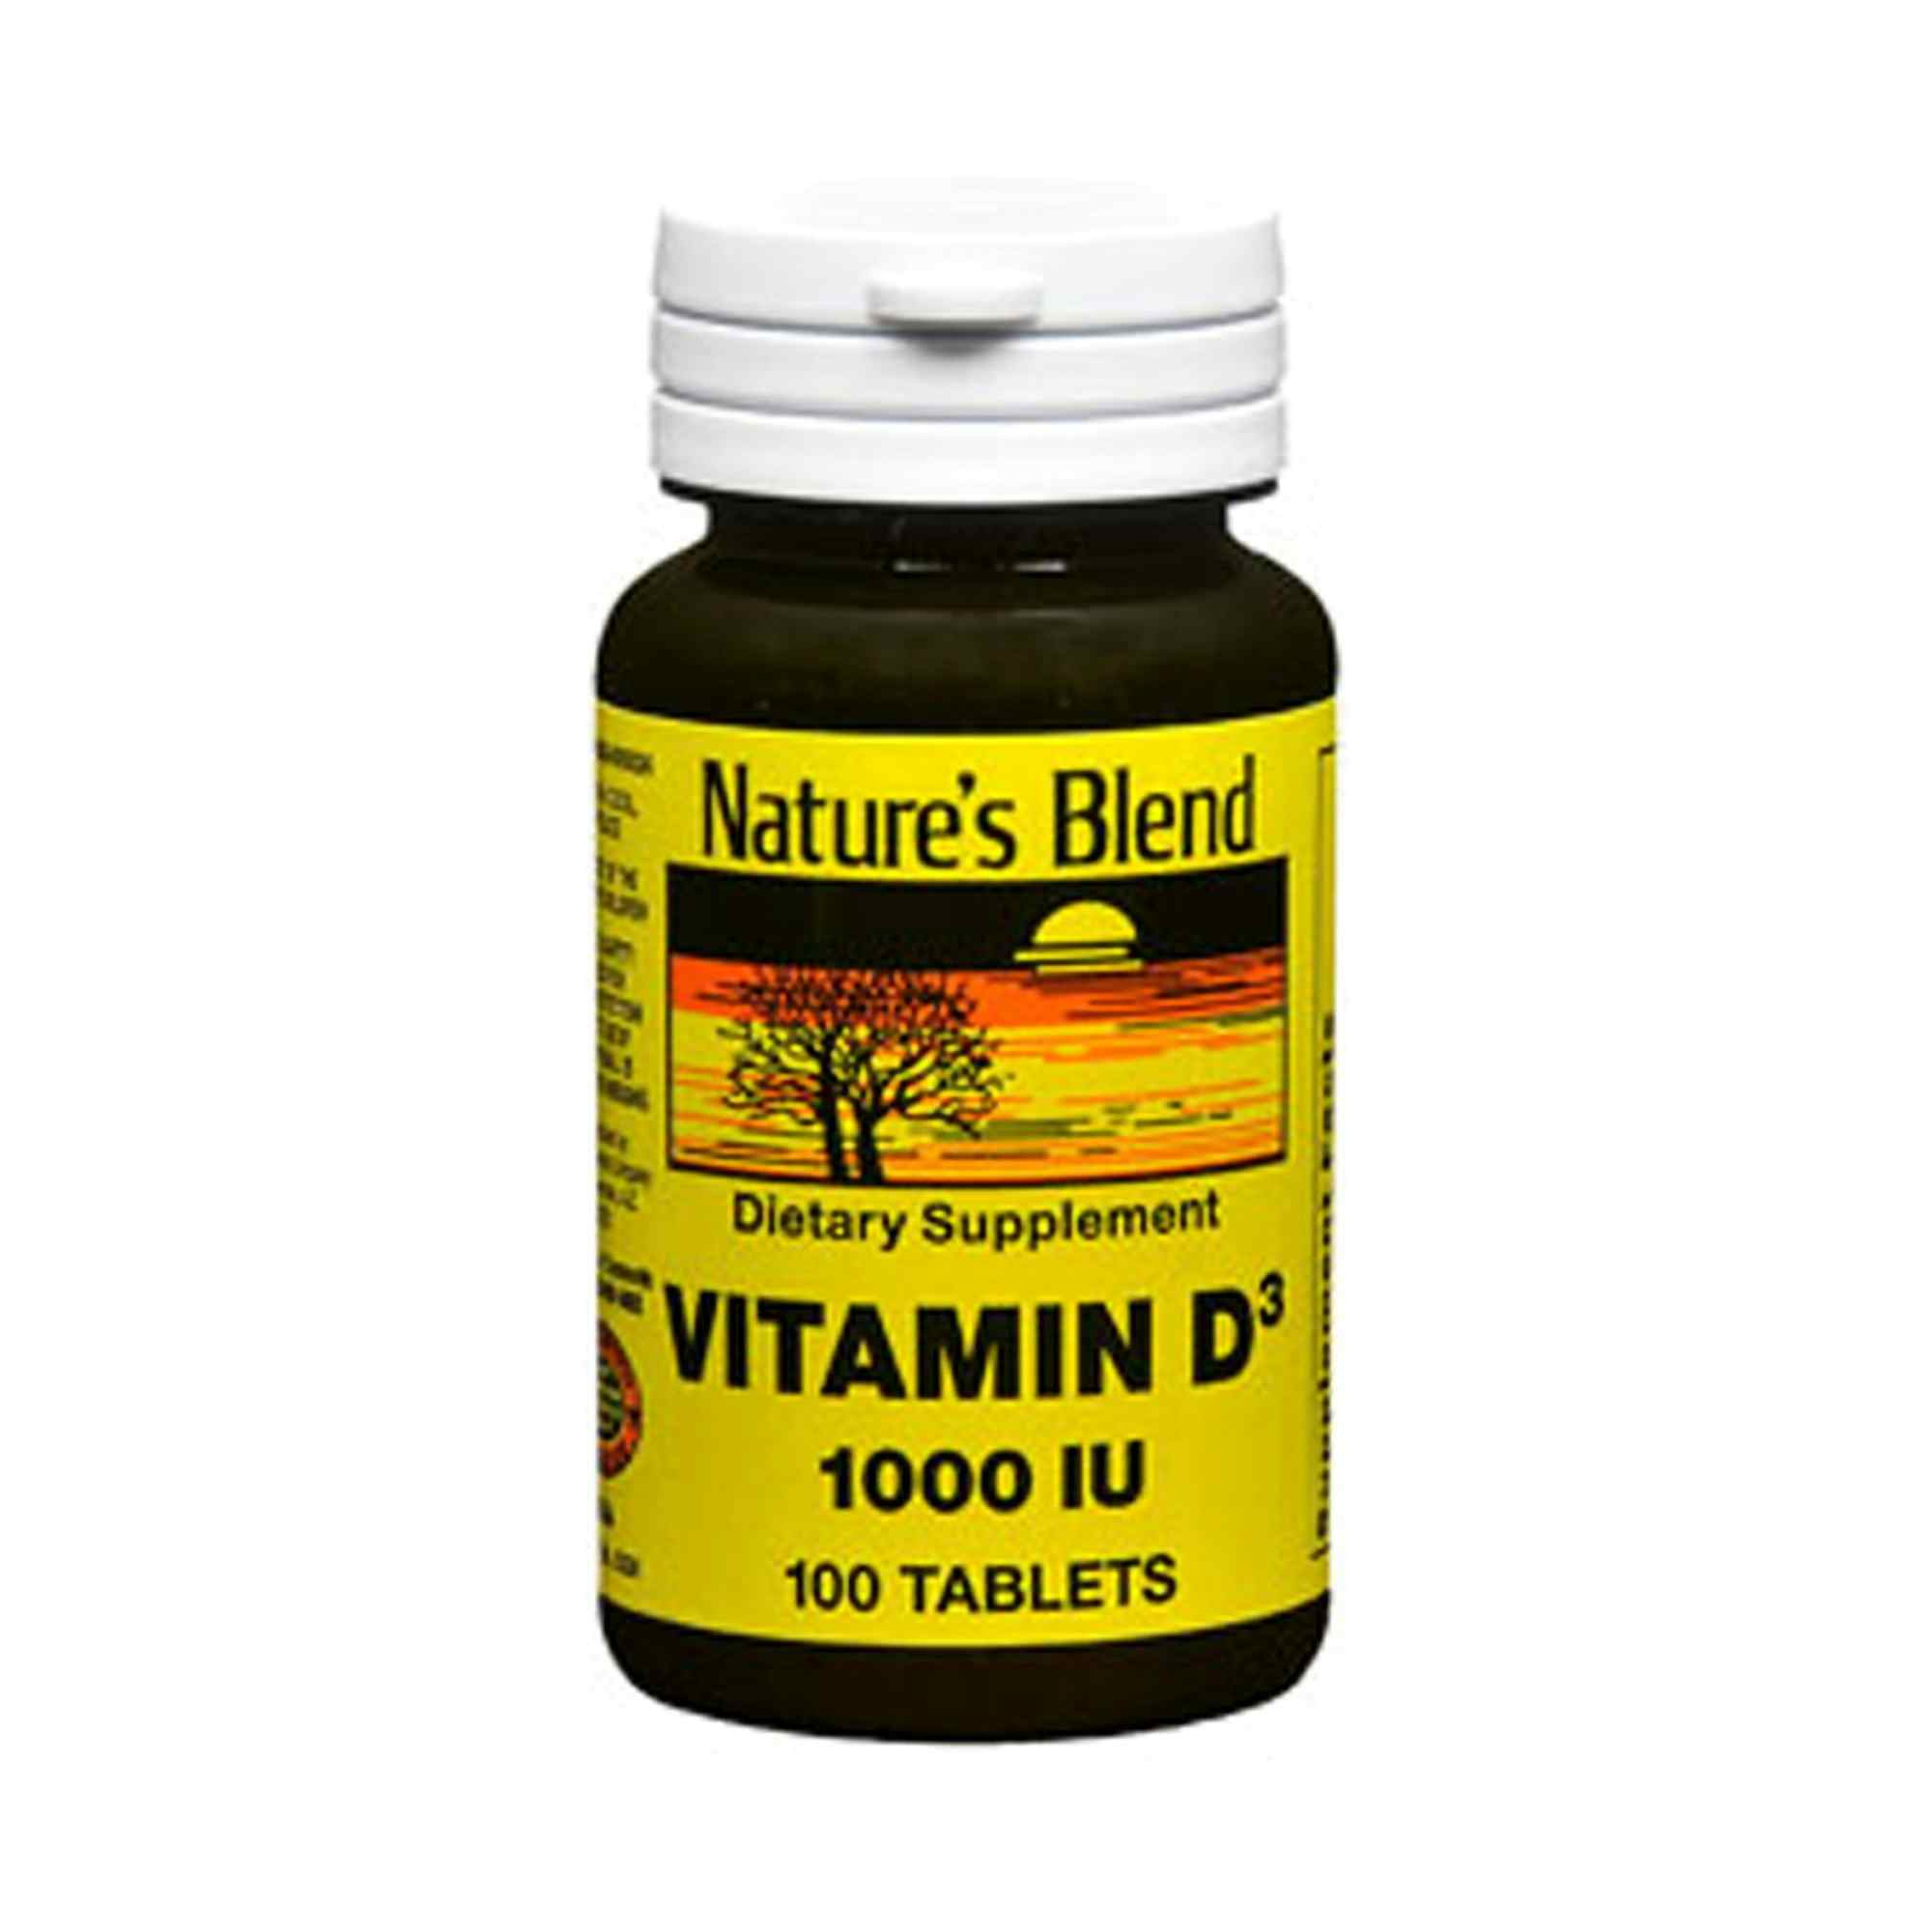 Nature's Blend Vitamin D3 Supplement